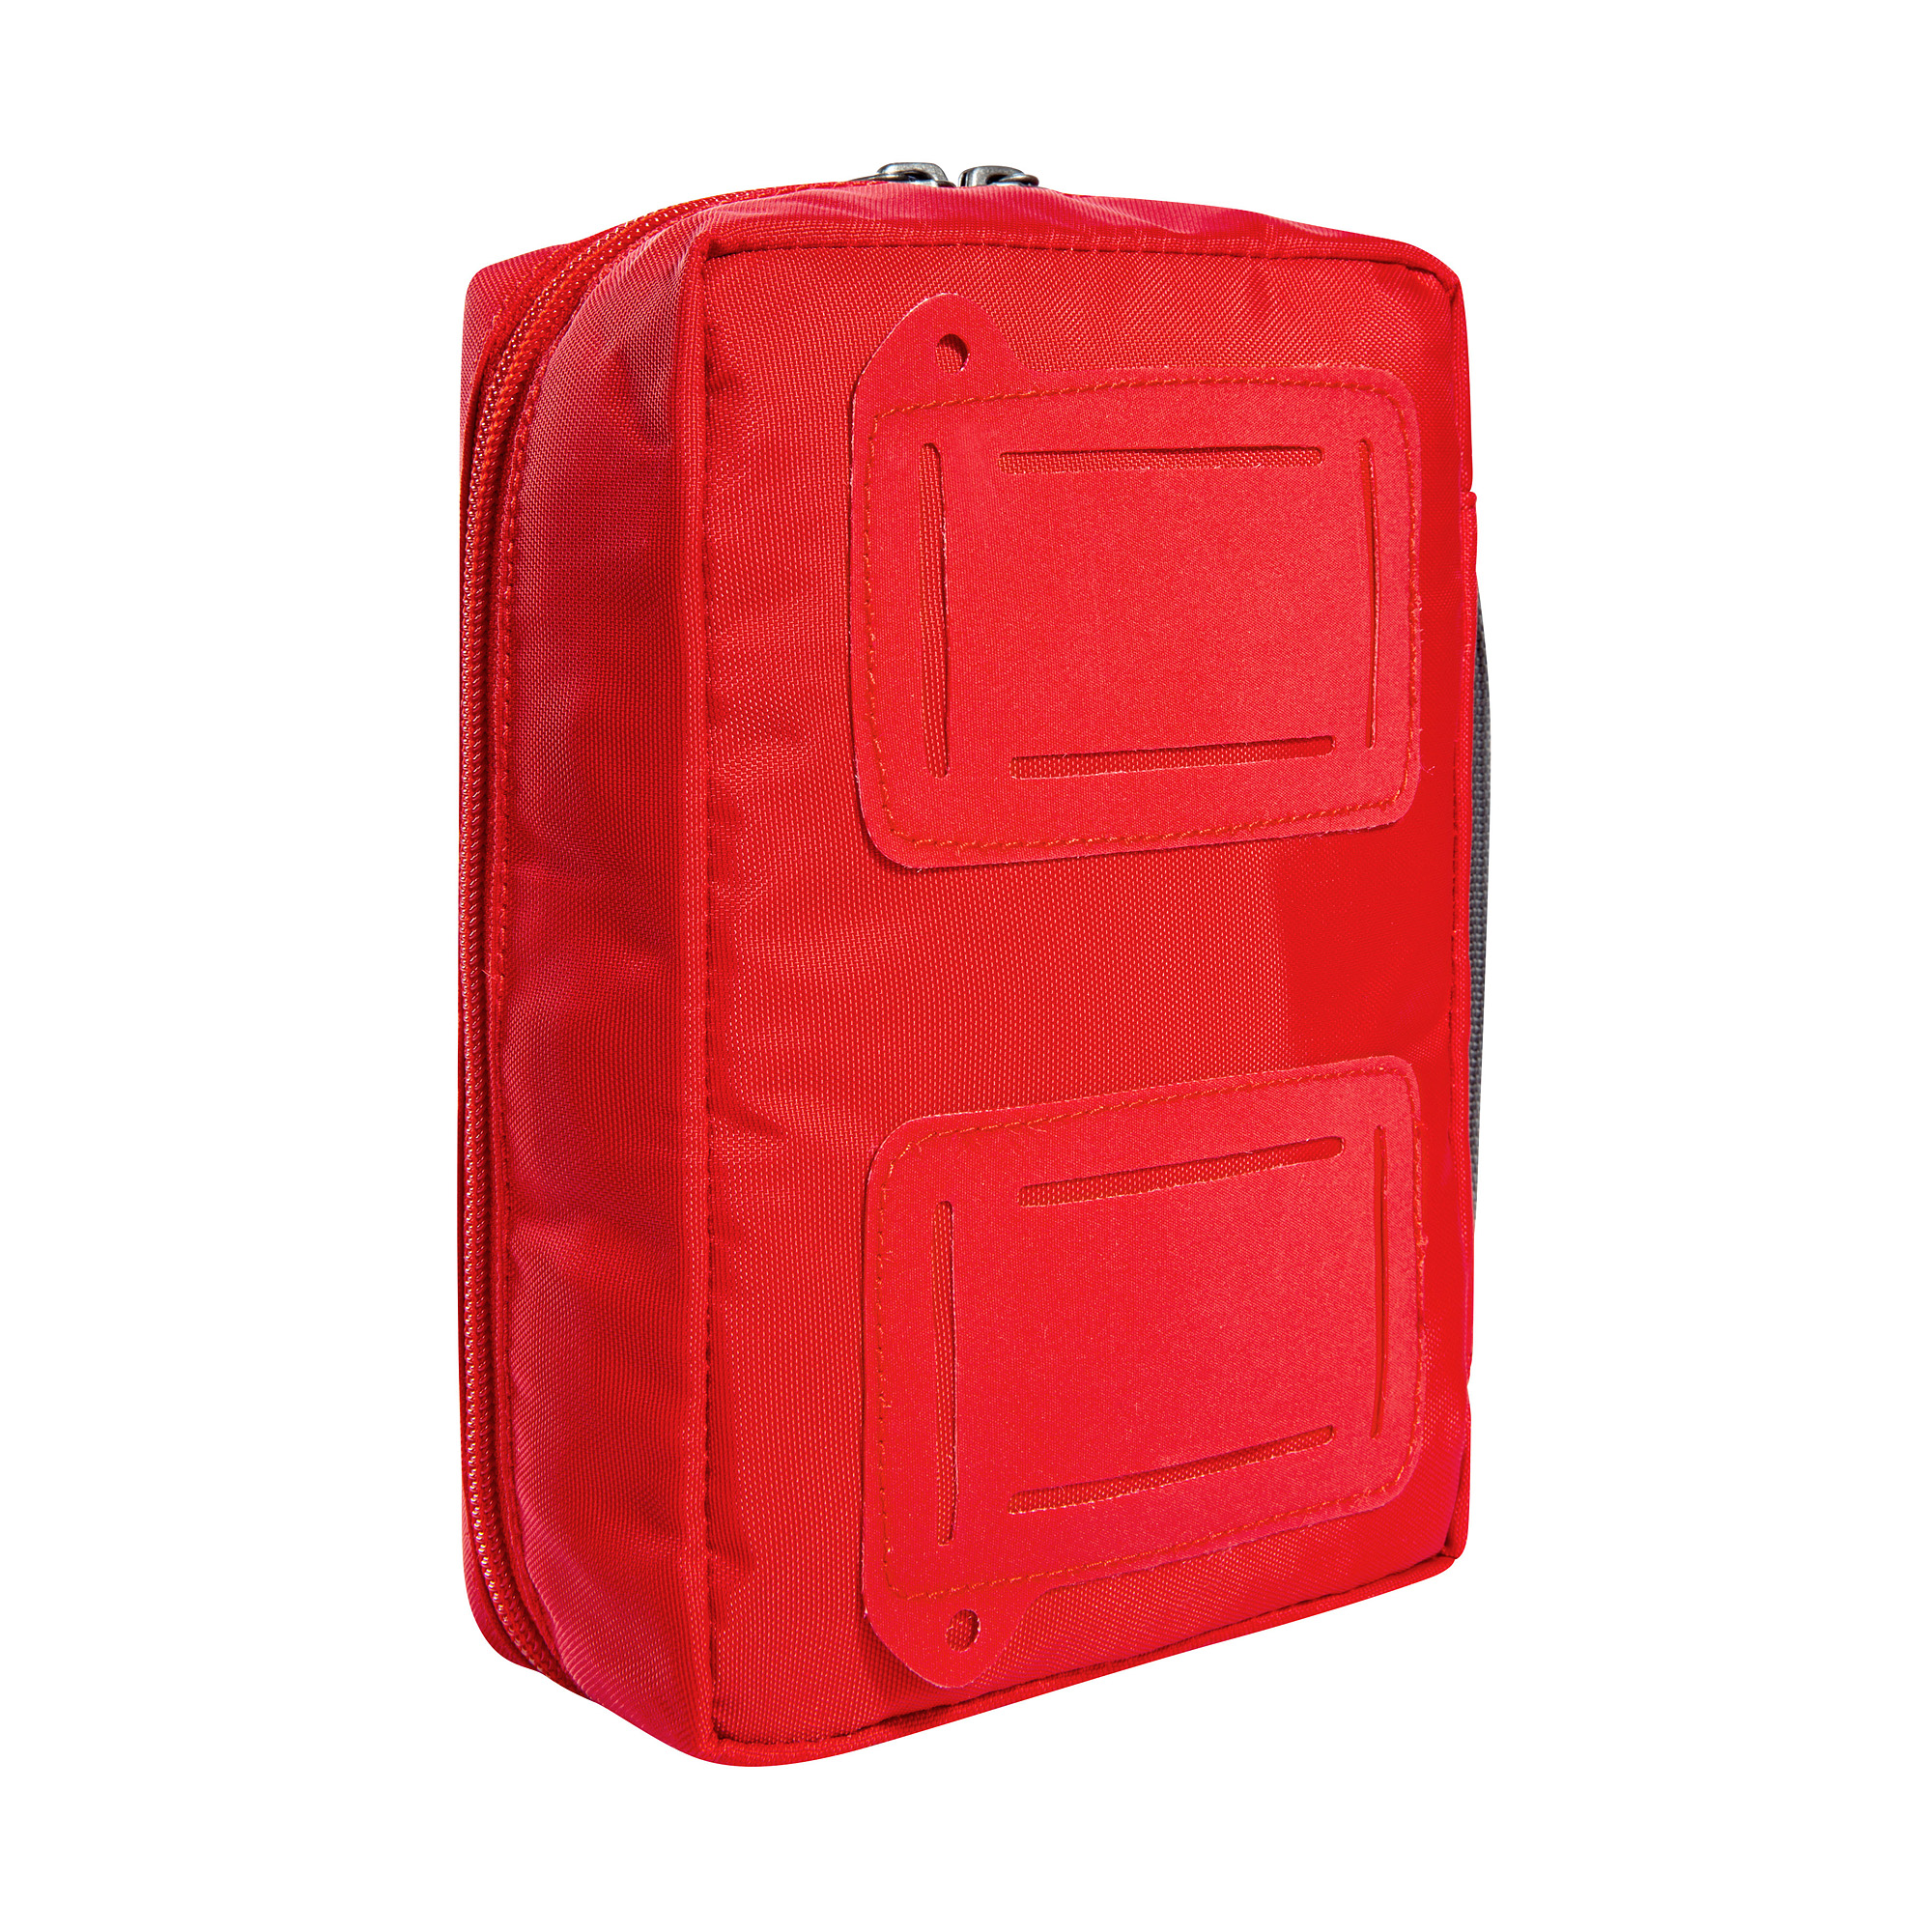 Tatonka First Aid Compact red rot Rucksack-Zubehör 4013236000559